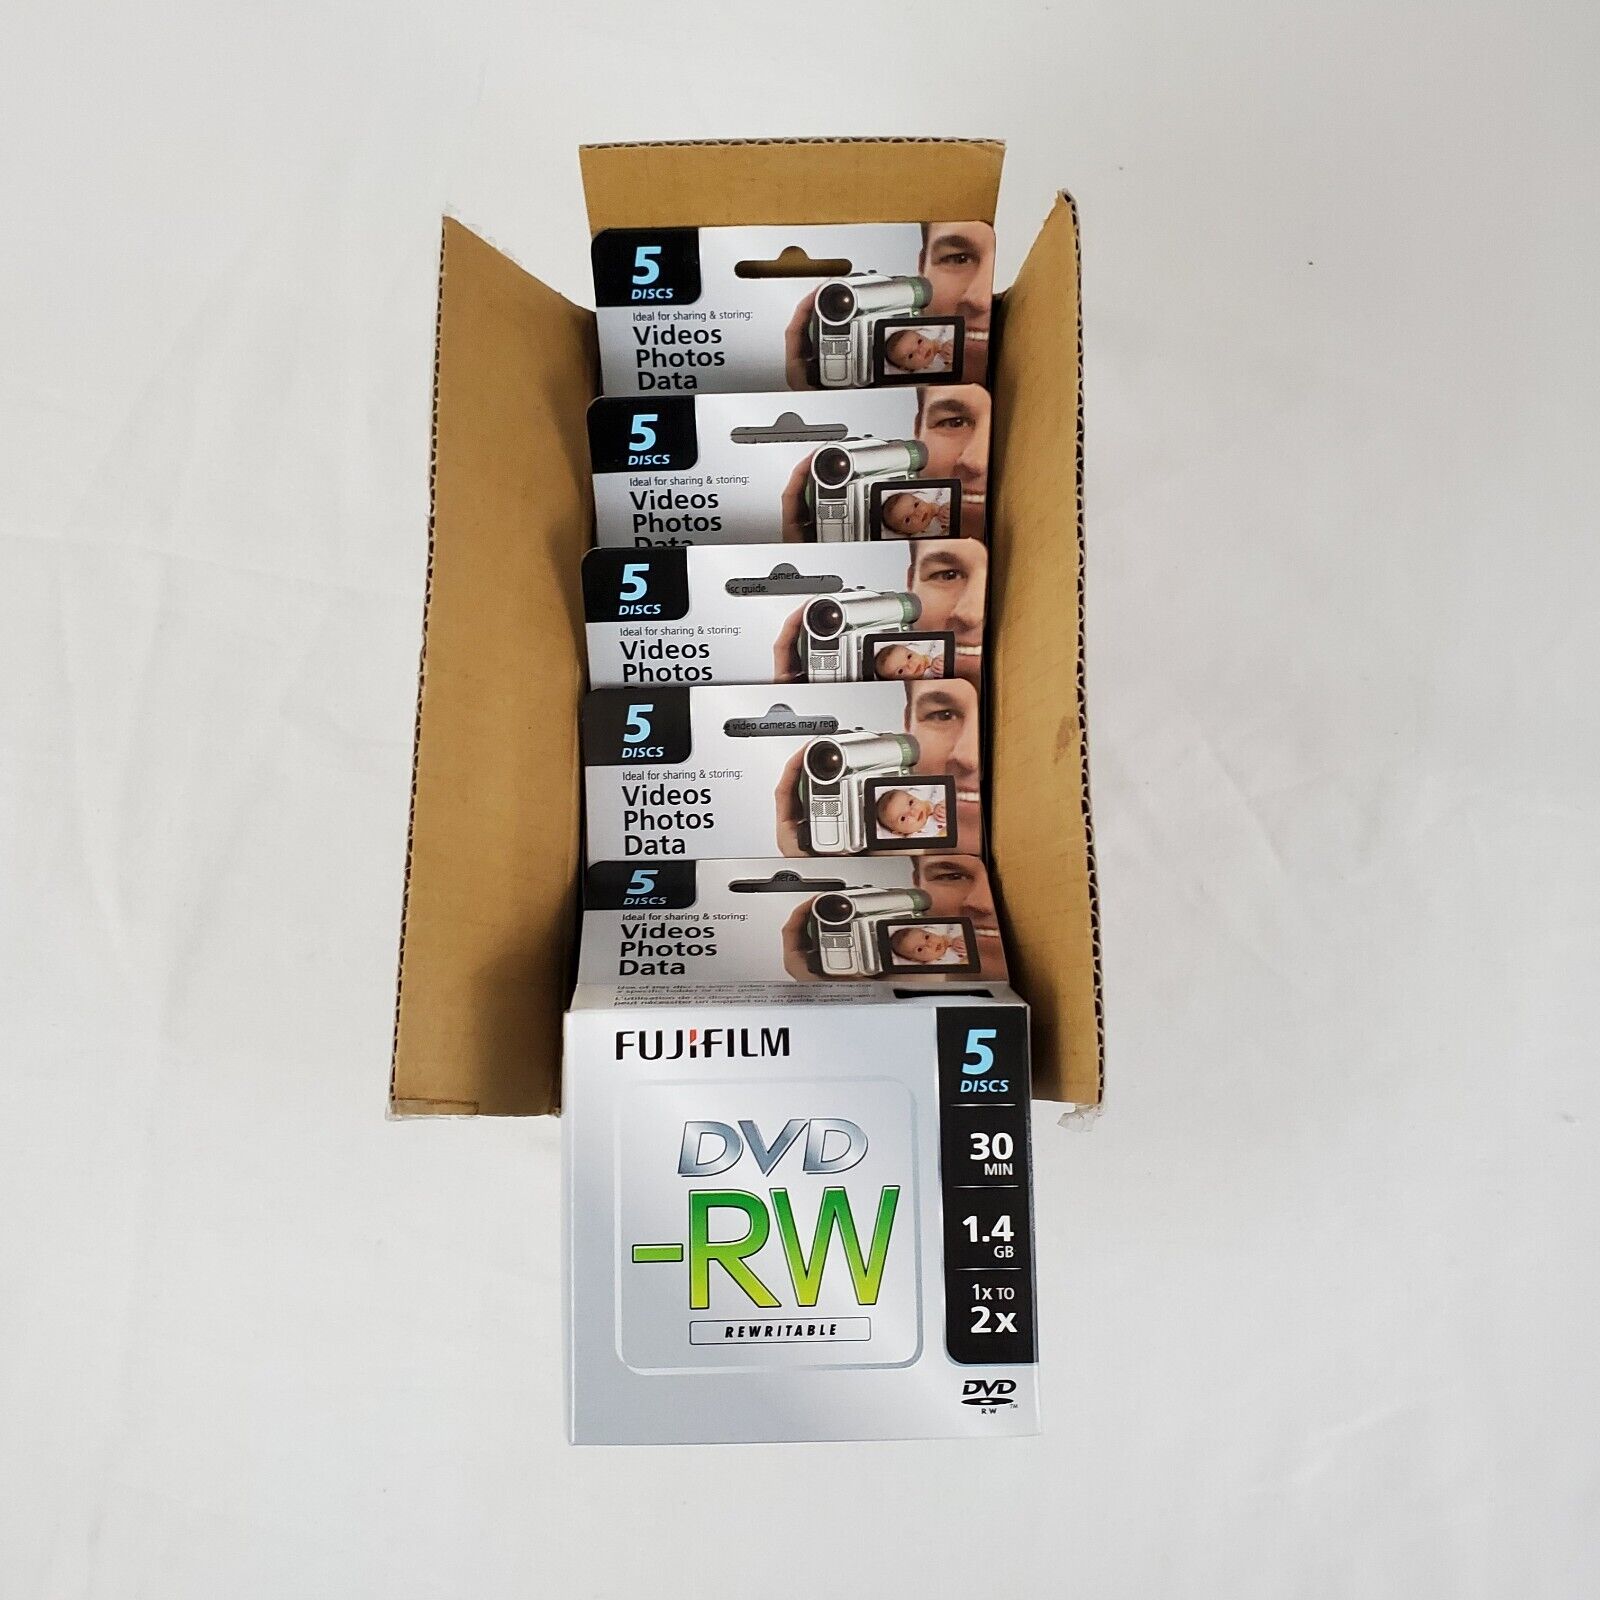 25 Fujifilm DVD-RW 80mm 1.4-GB 30 Min 4X Camcorder Video Photo Data 1 Case 5x5pk